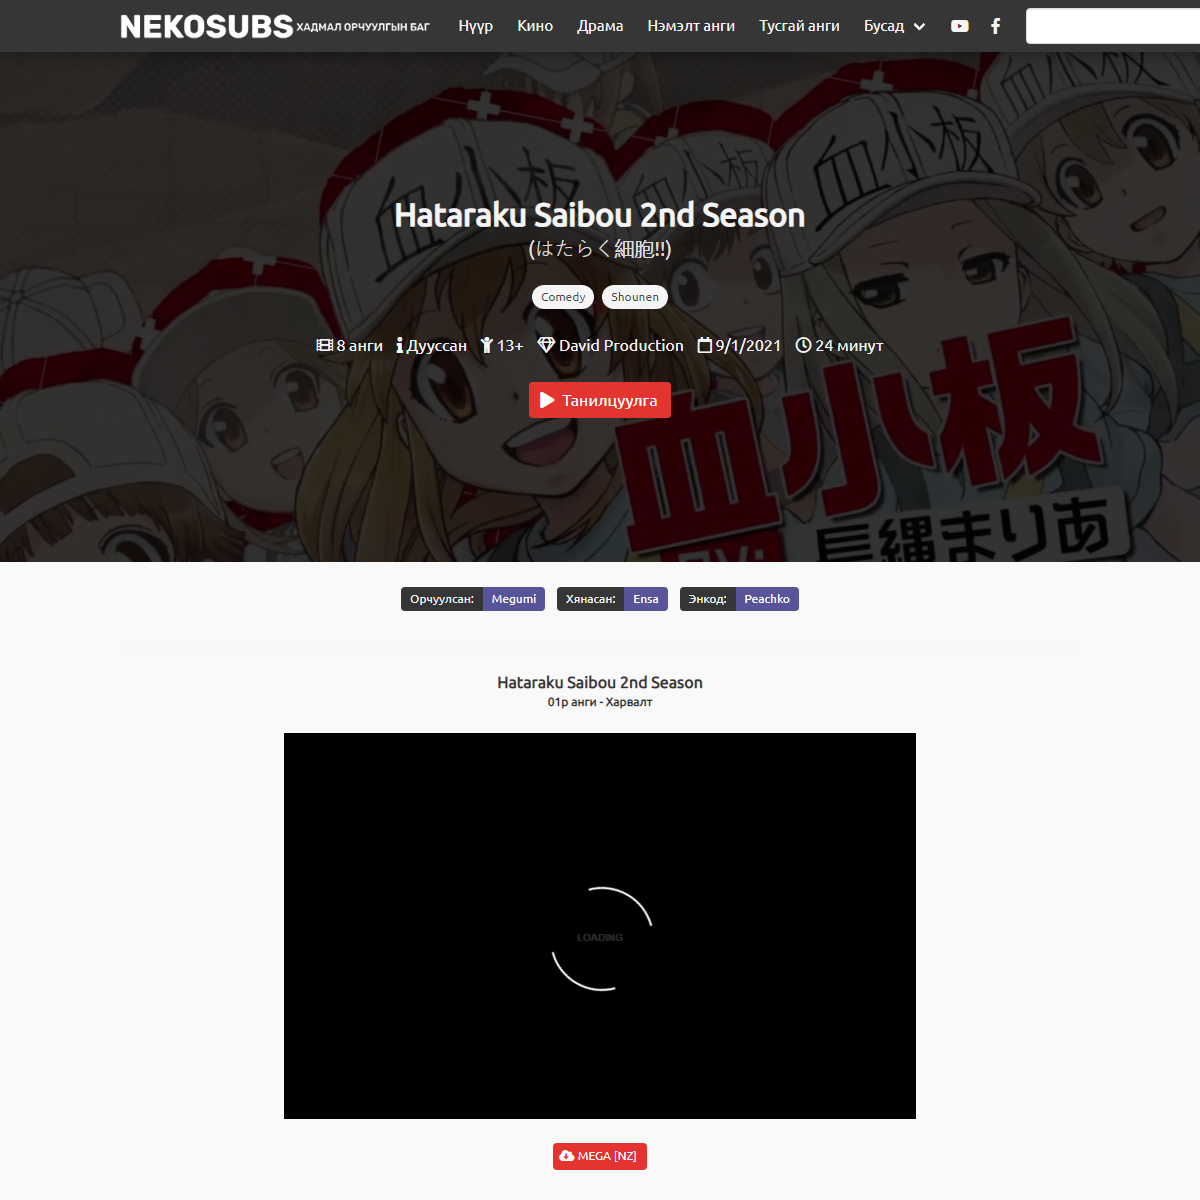 A complete backup of https://www.nekosubs.net/nekos/hataraku-saibou-2nd-season/watch/4559